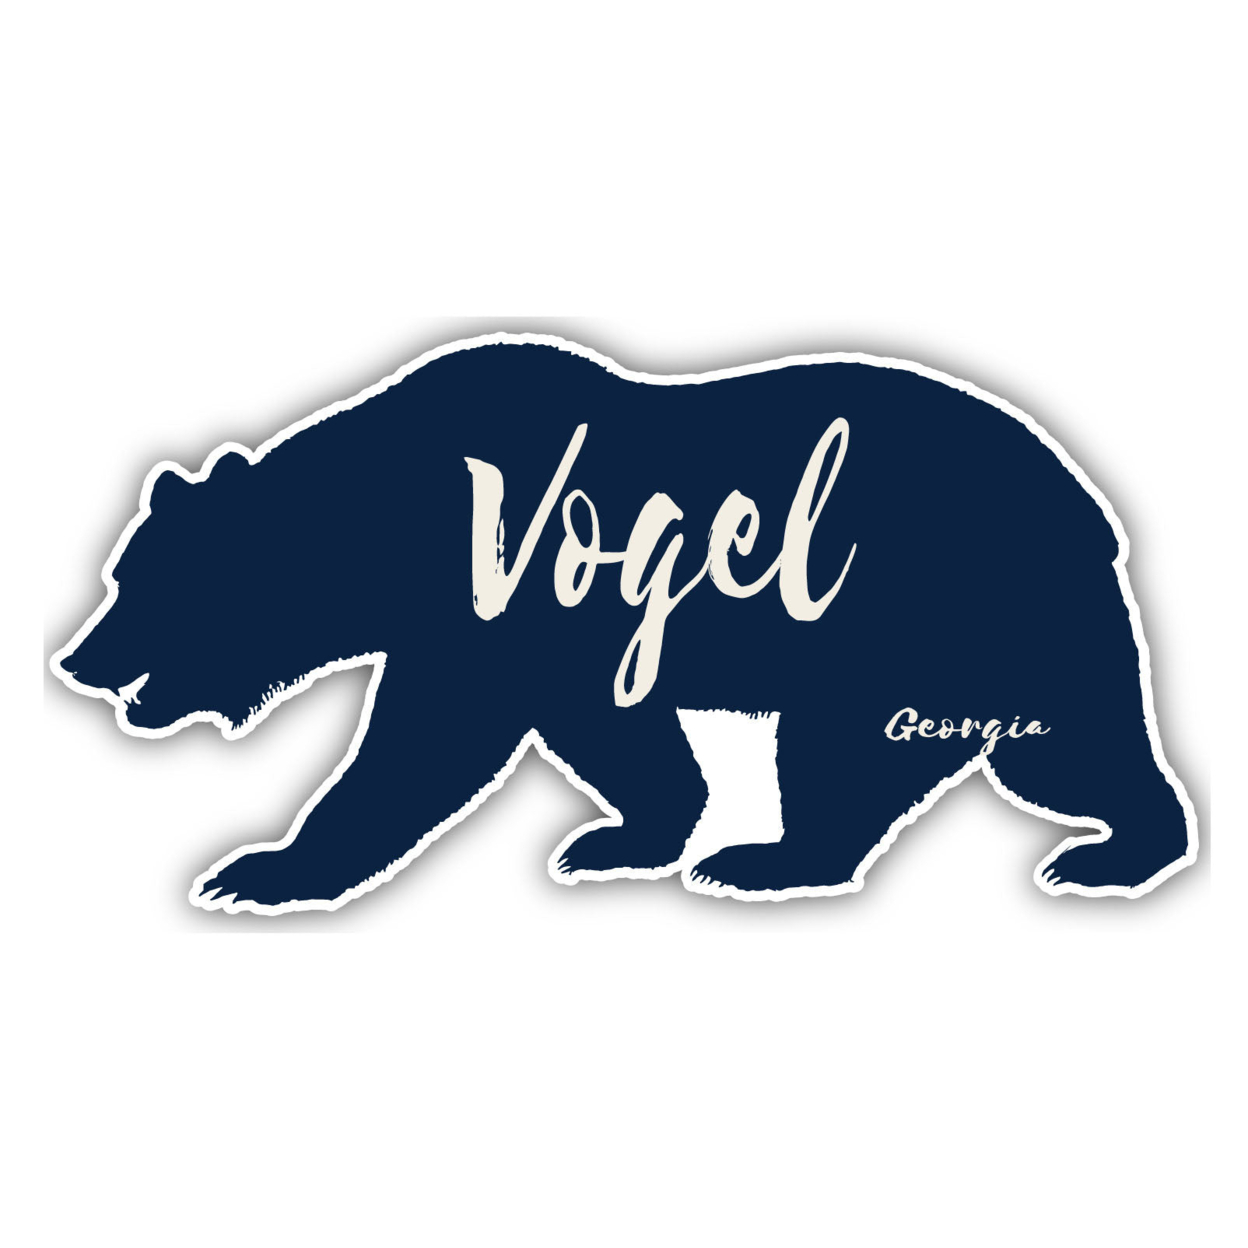 Vogel Georgia Souvenir Decorative Stickers (Choose Theme And Size) - Single Unit, 4-Inch, Bear